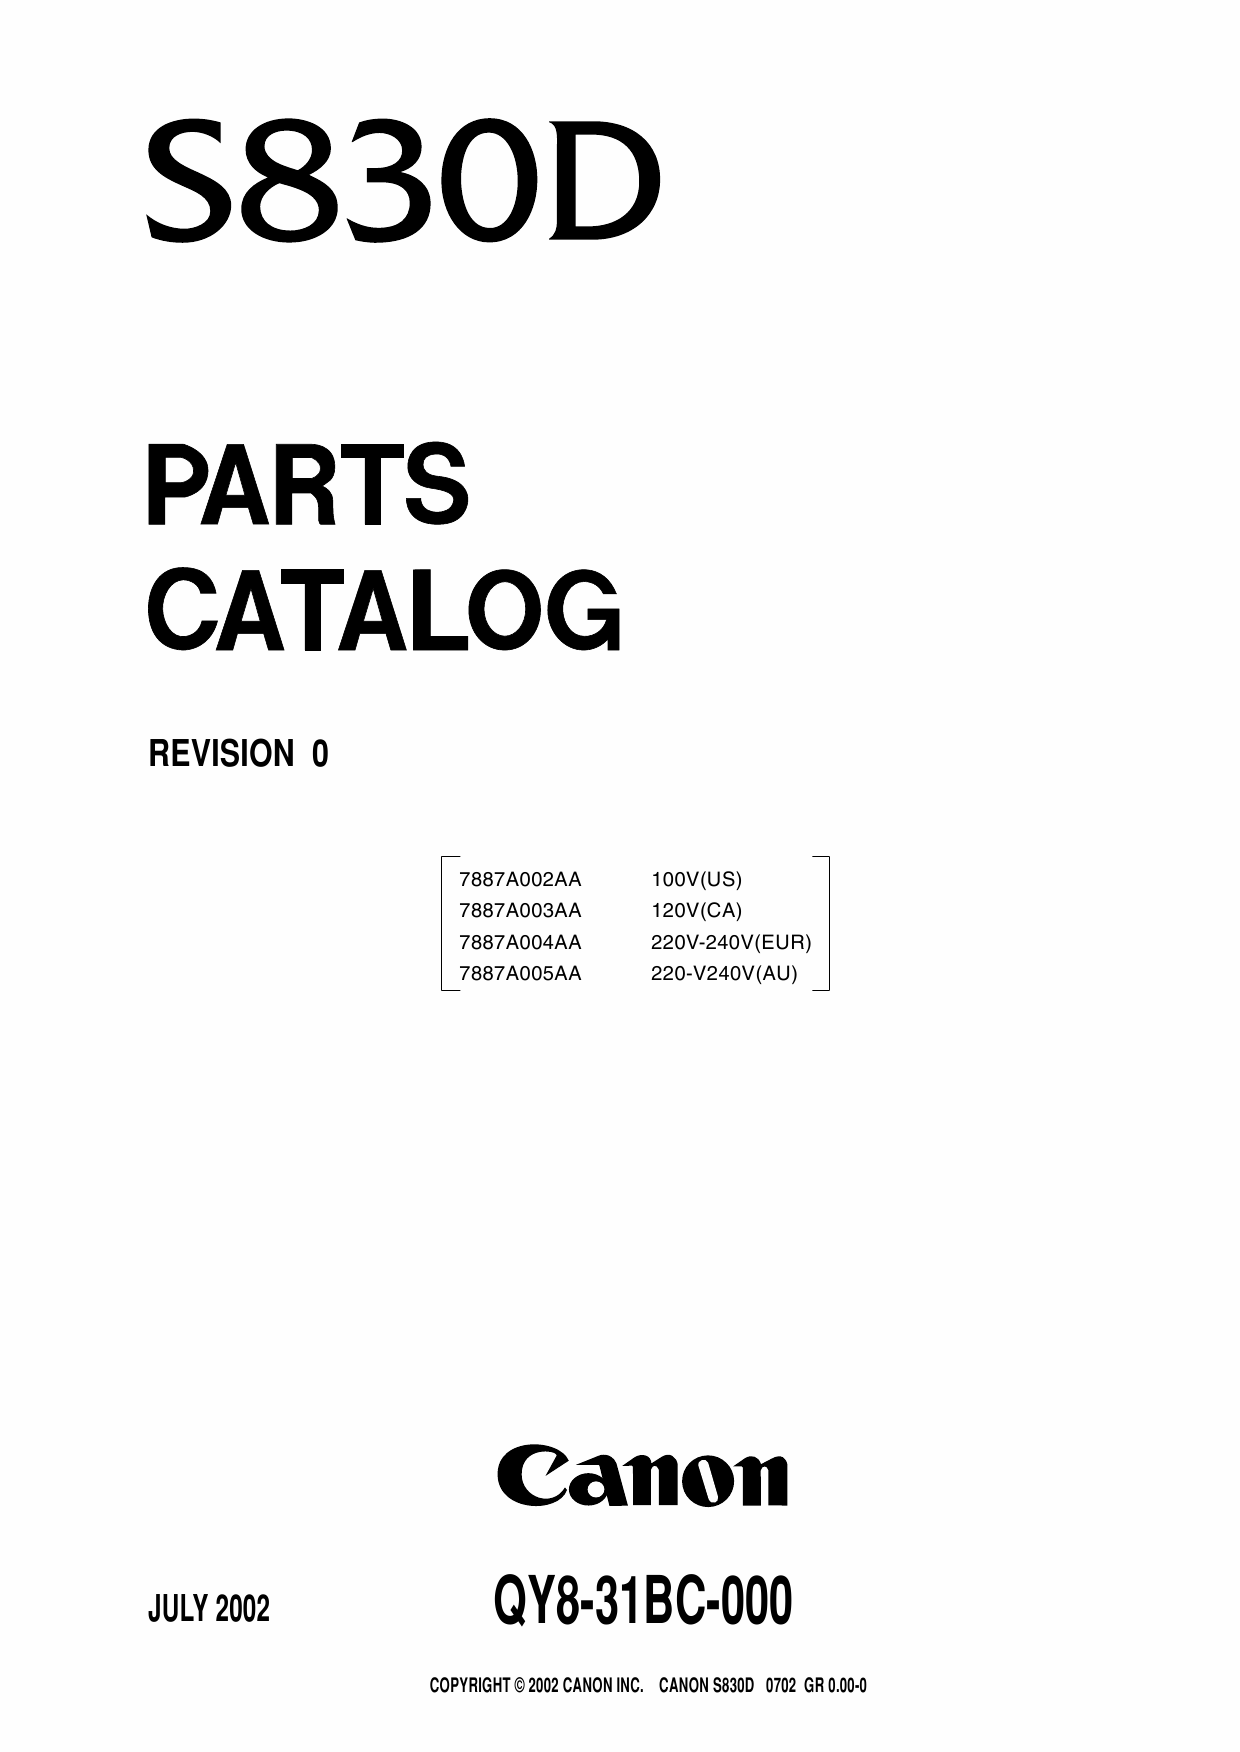 Canon PIXUS S830D Parts Catalog Manual-1